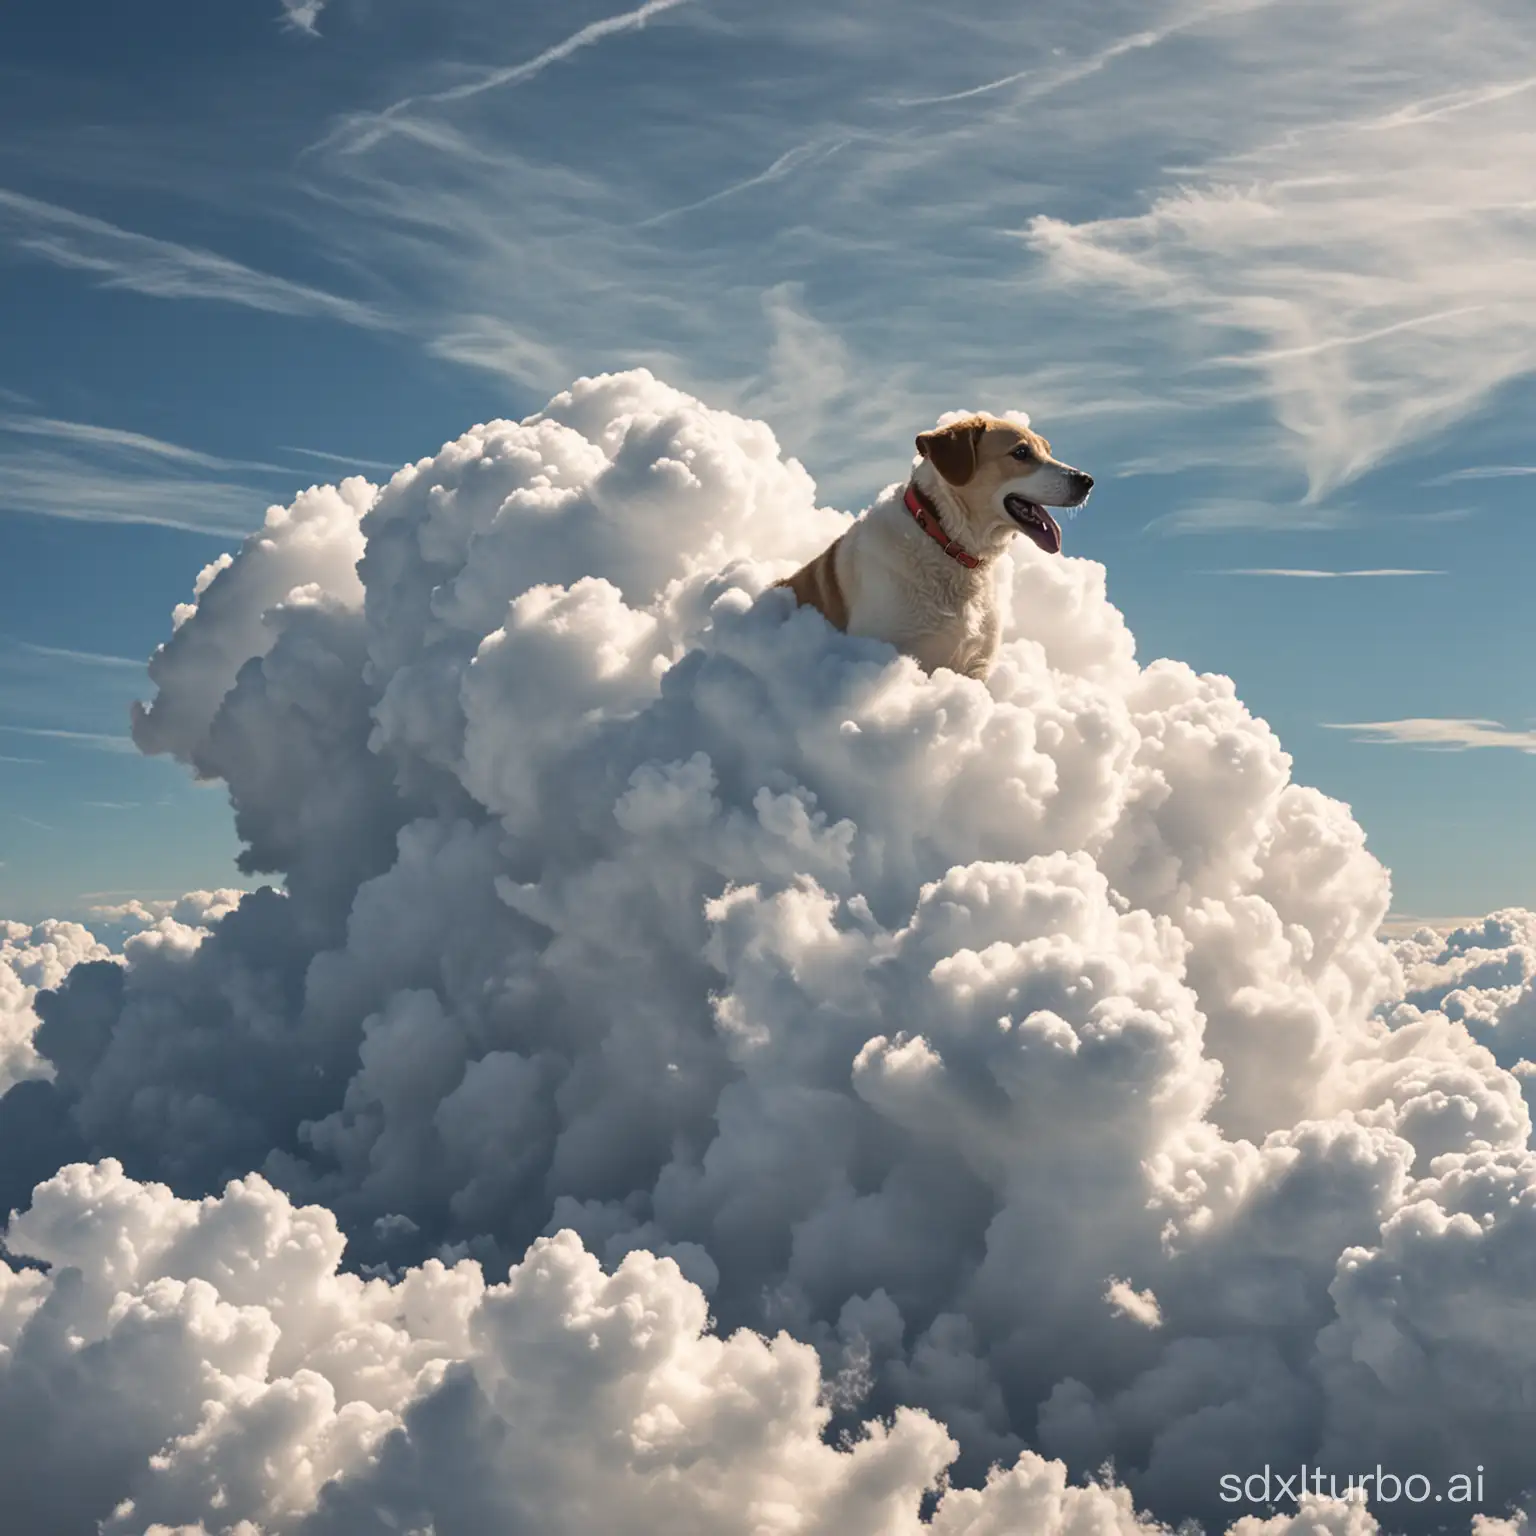 Playful-Canine-Silhouette-in-Majestic-Cloudscape